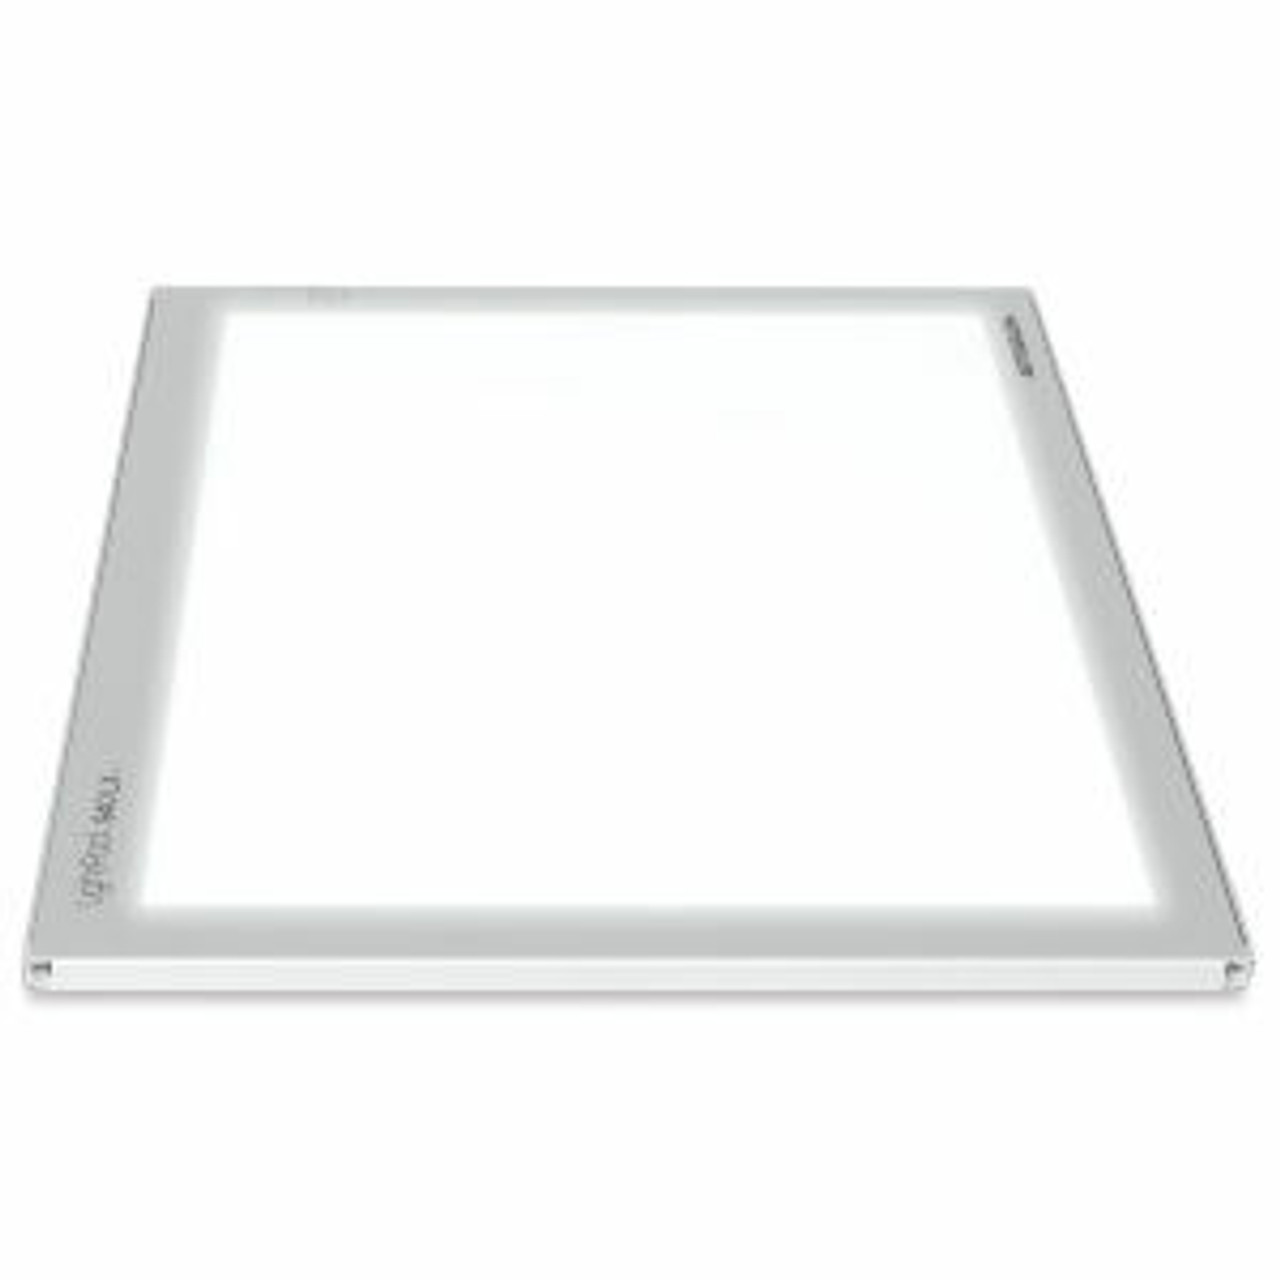 Artograph - LightPad LED Light Boxes - 9 x 12 - Sam Flax Atlanta